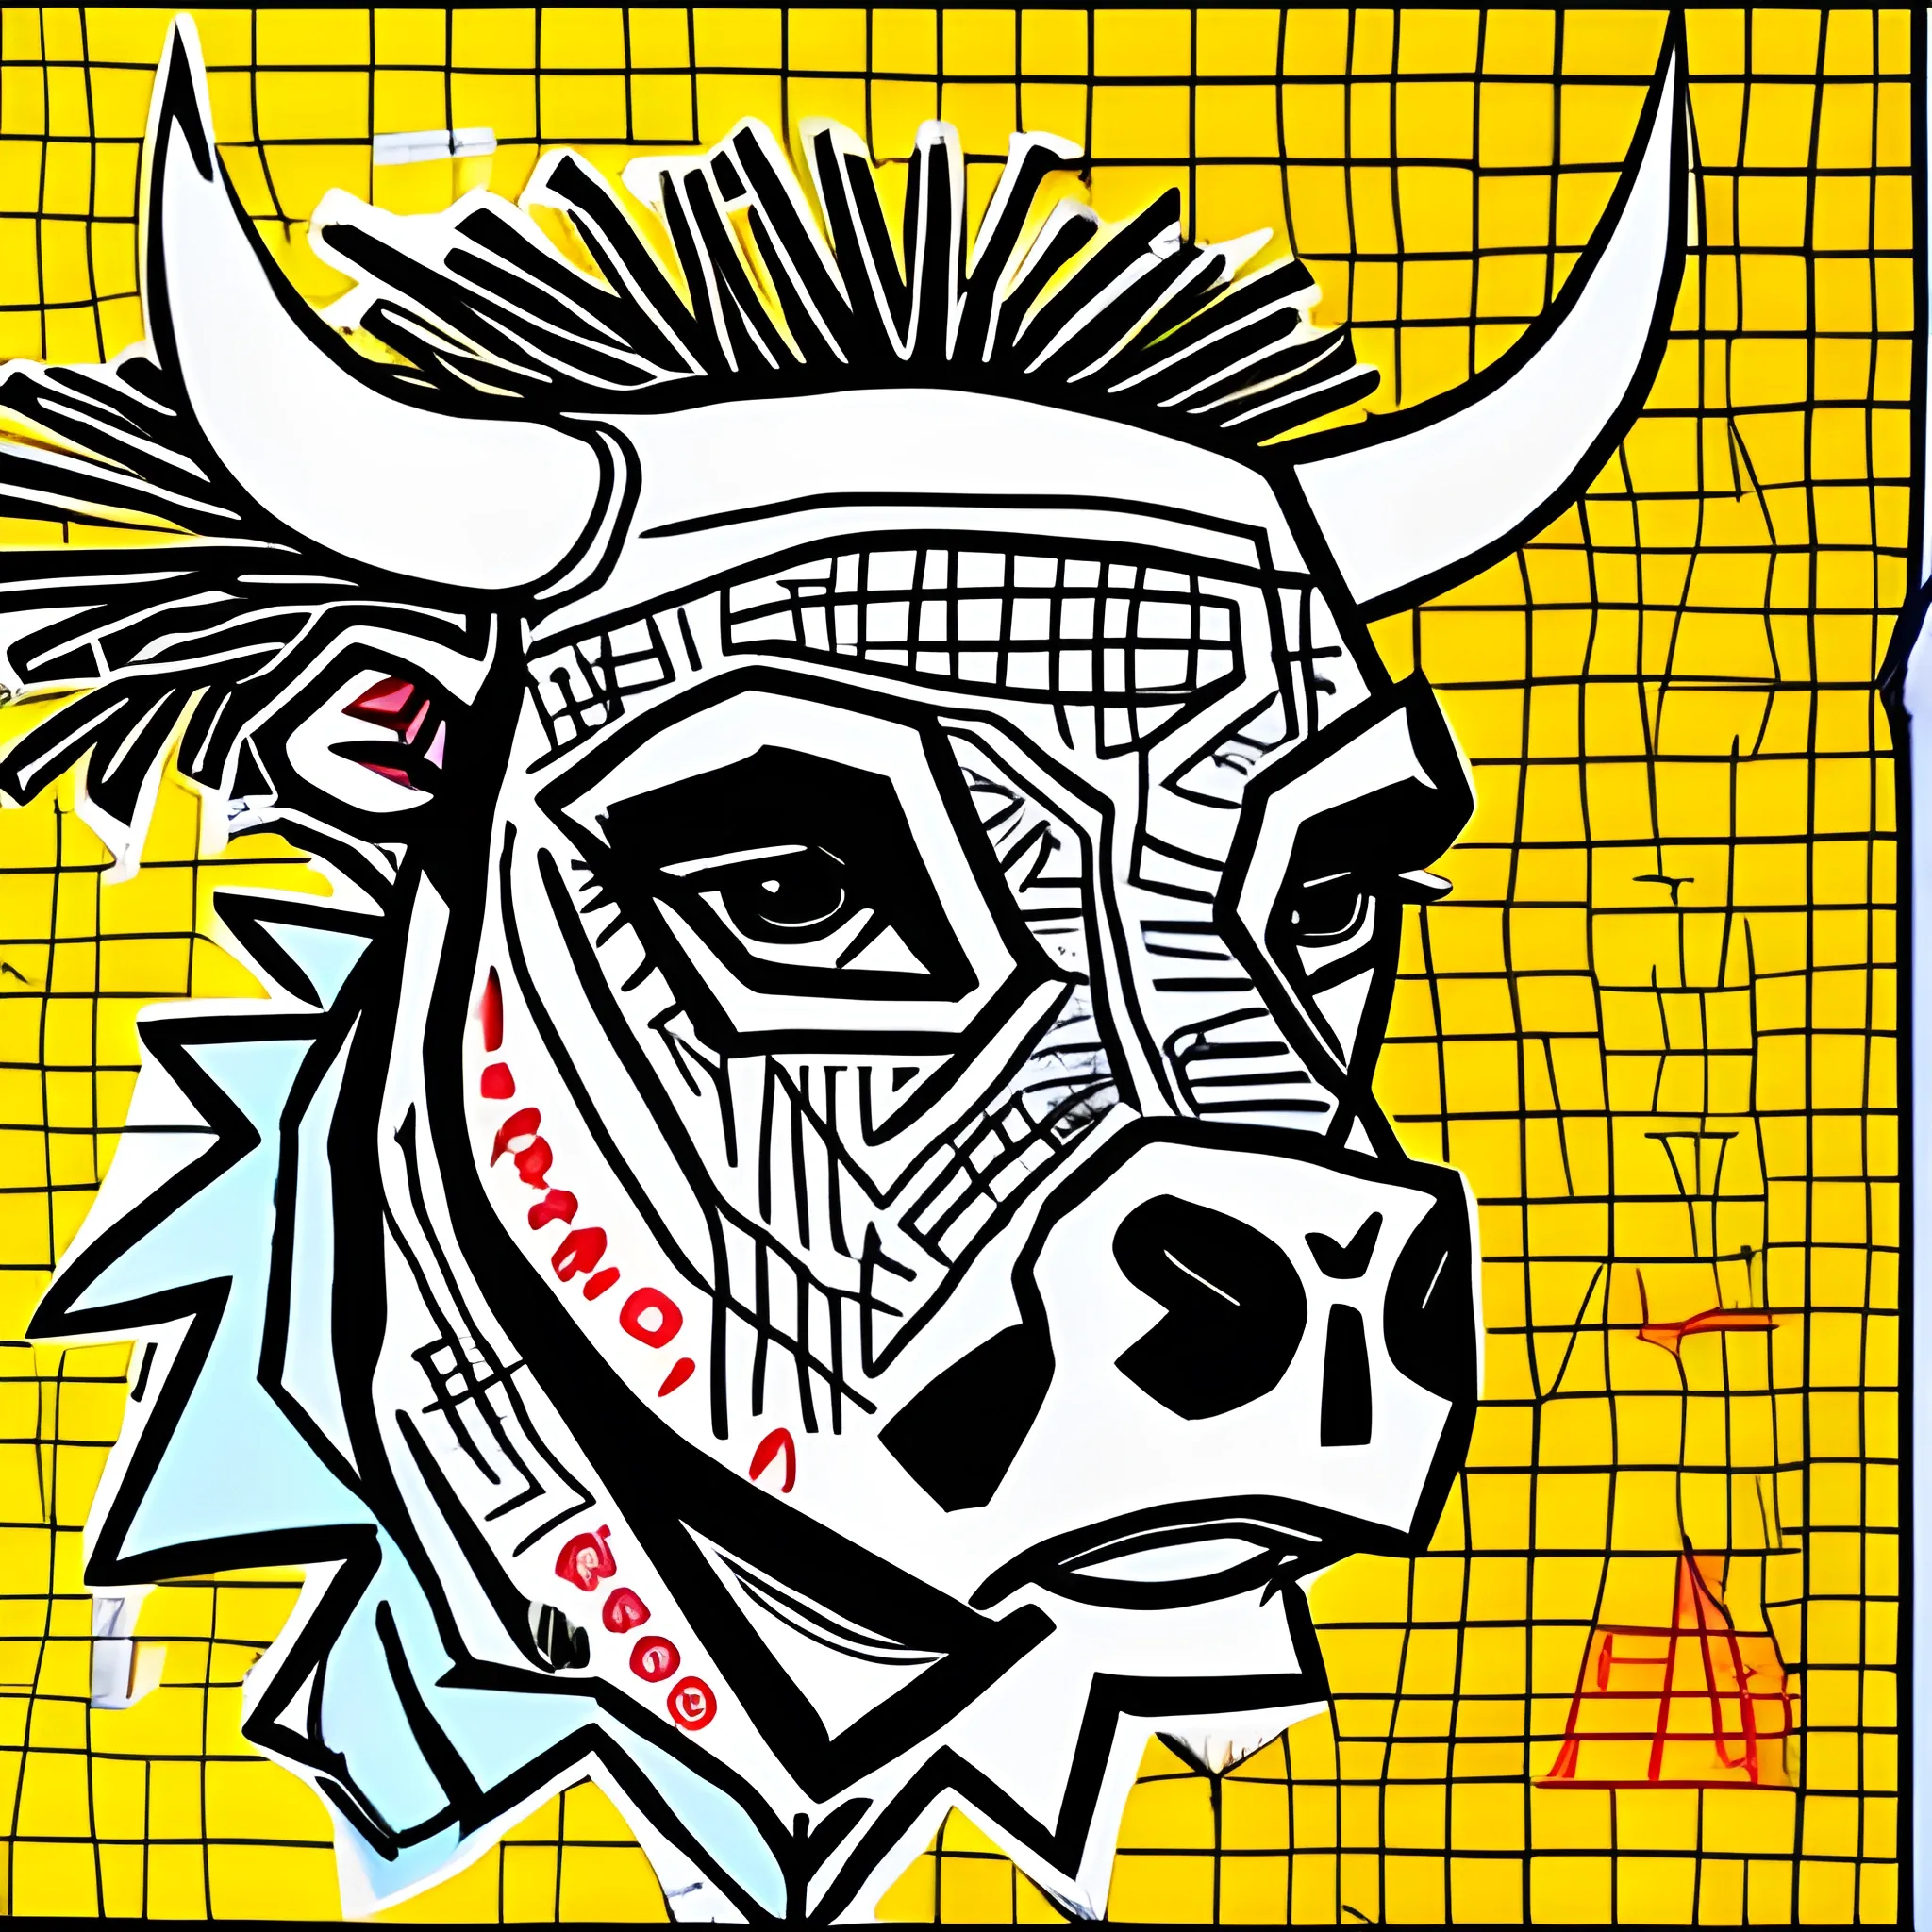 crypto bull in basquiat style, sharp focus